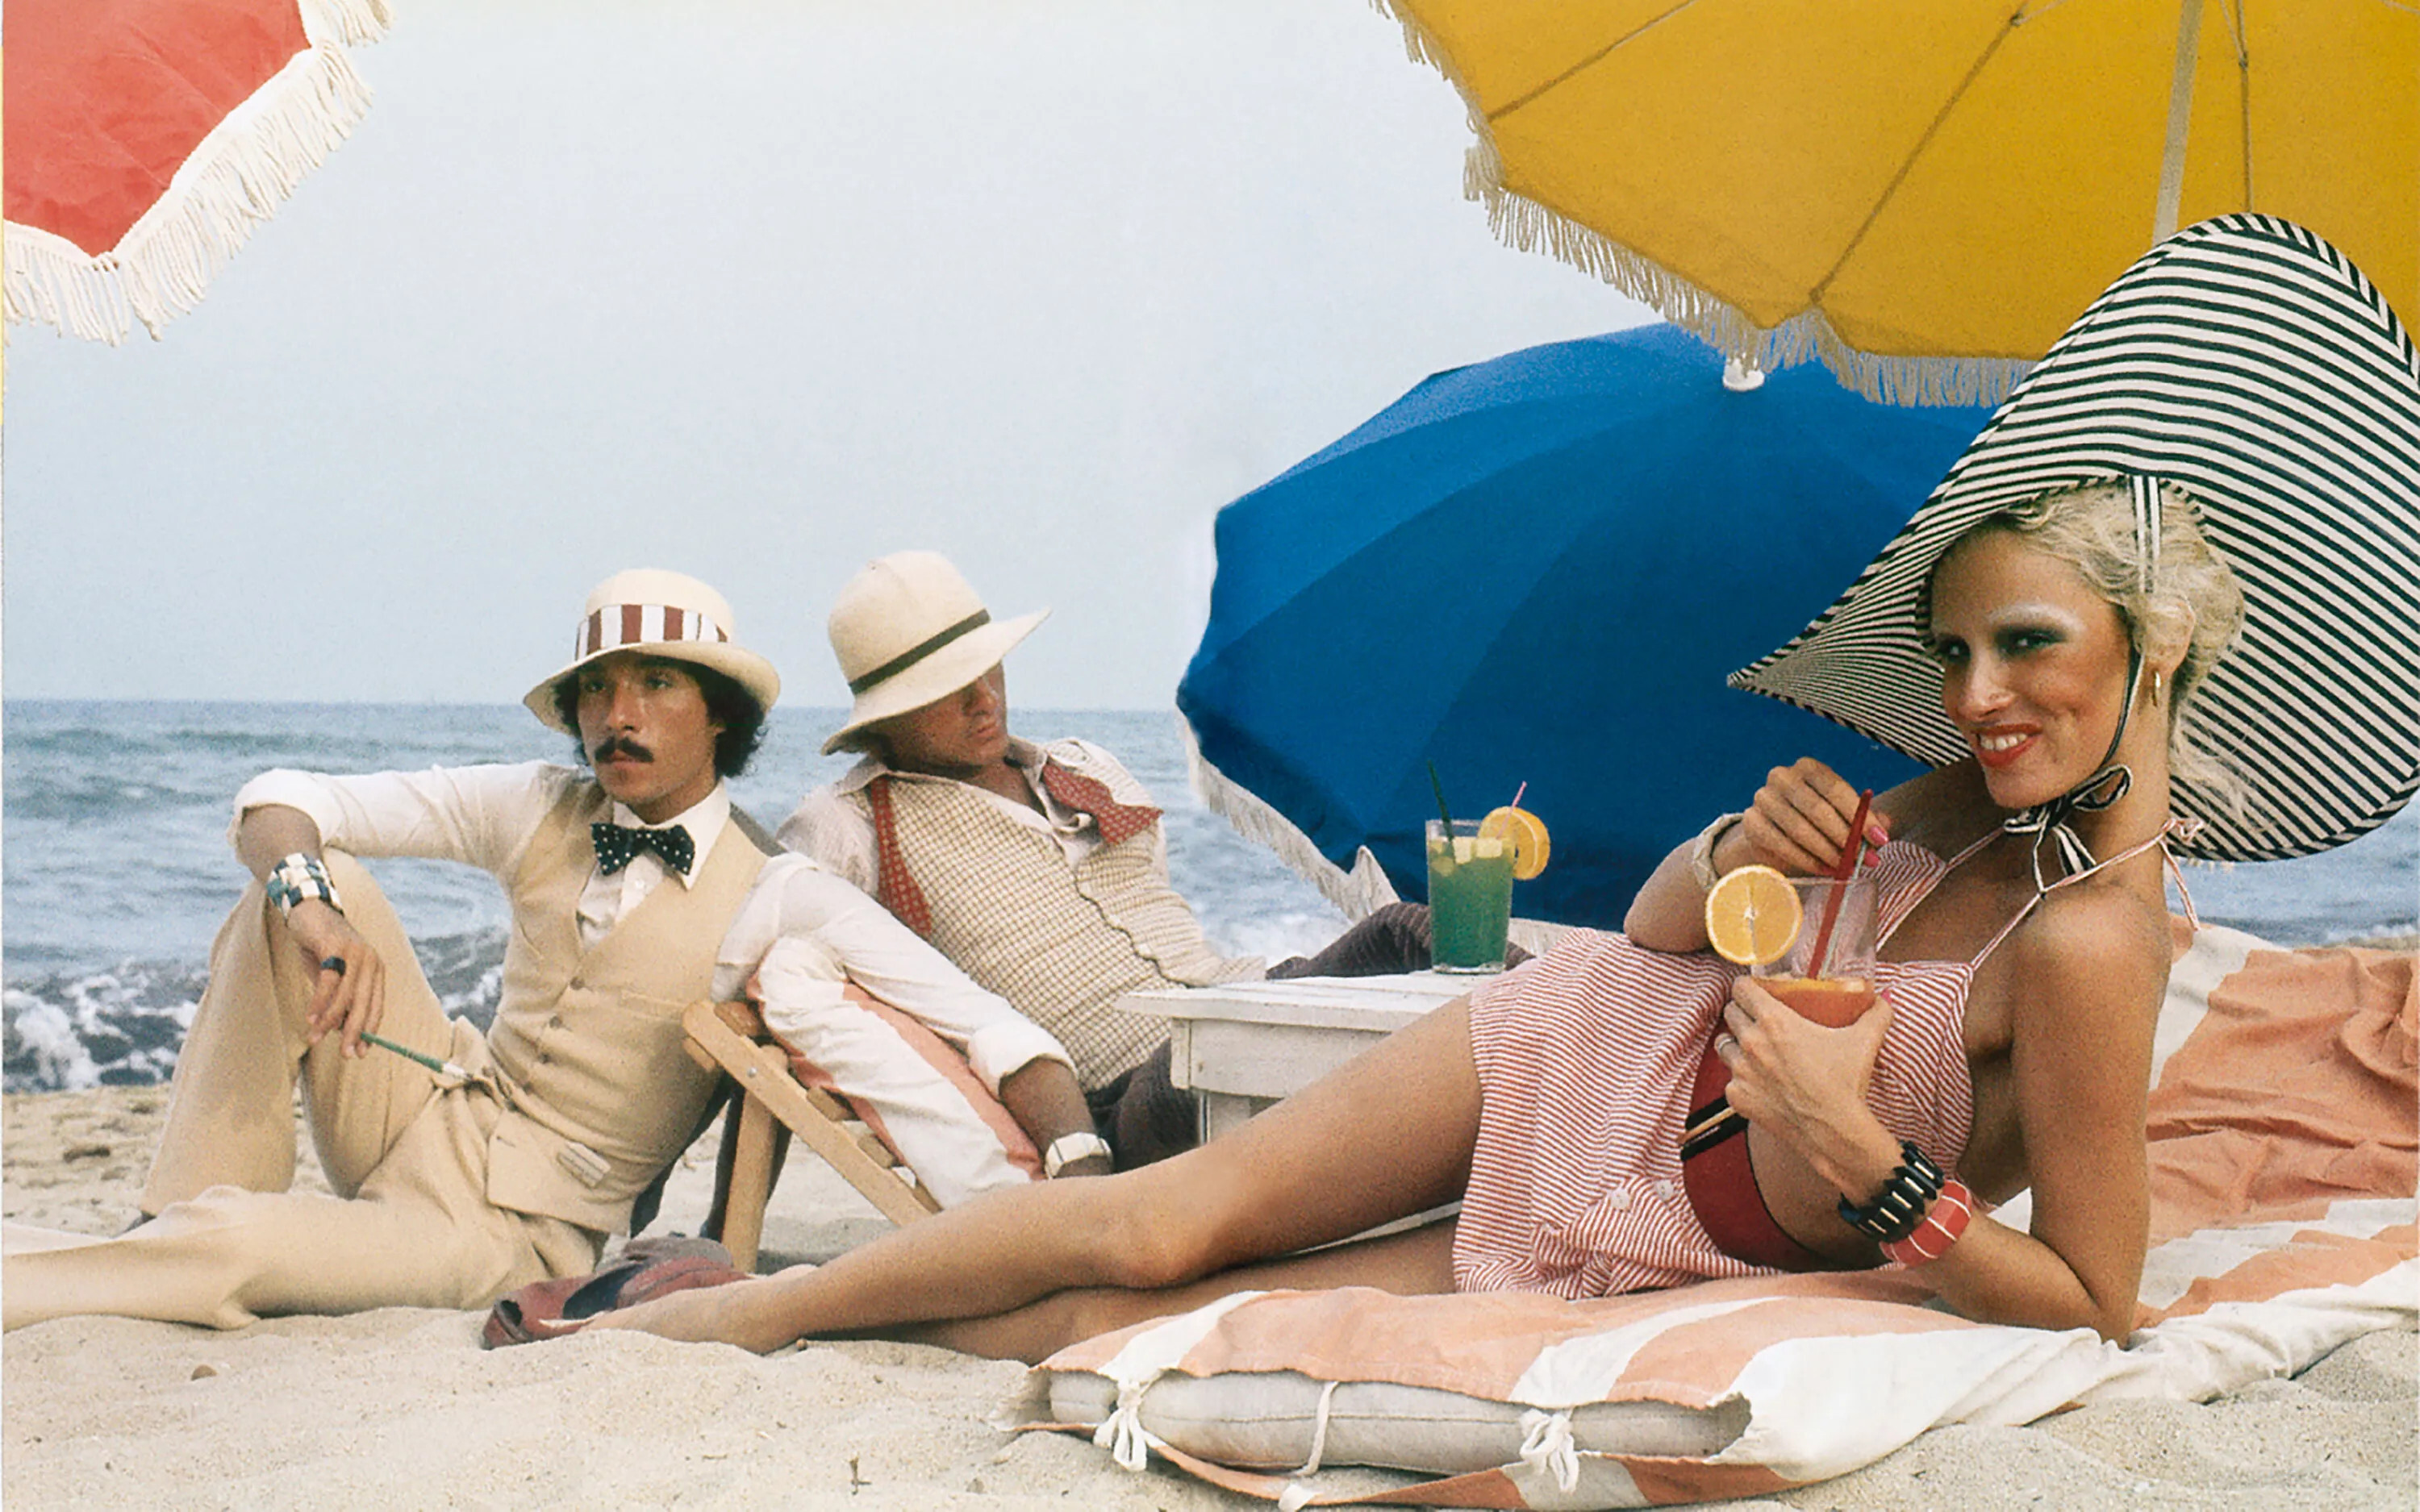 Антонио Лопес, Кори Типпин и Донна Джордан, Сен-Тропе, 1970 год. Фотограф Антонио Лопес